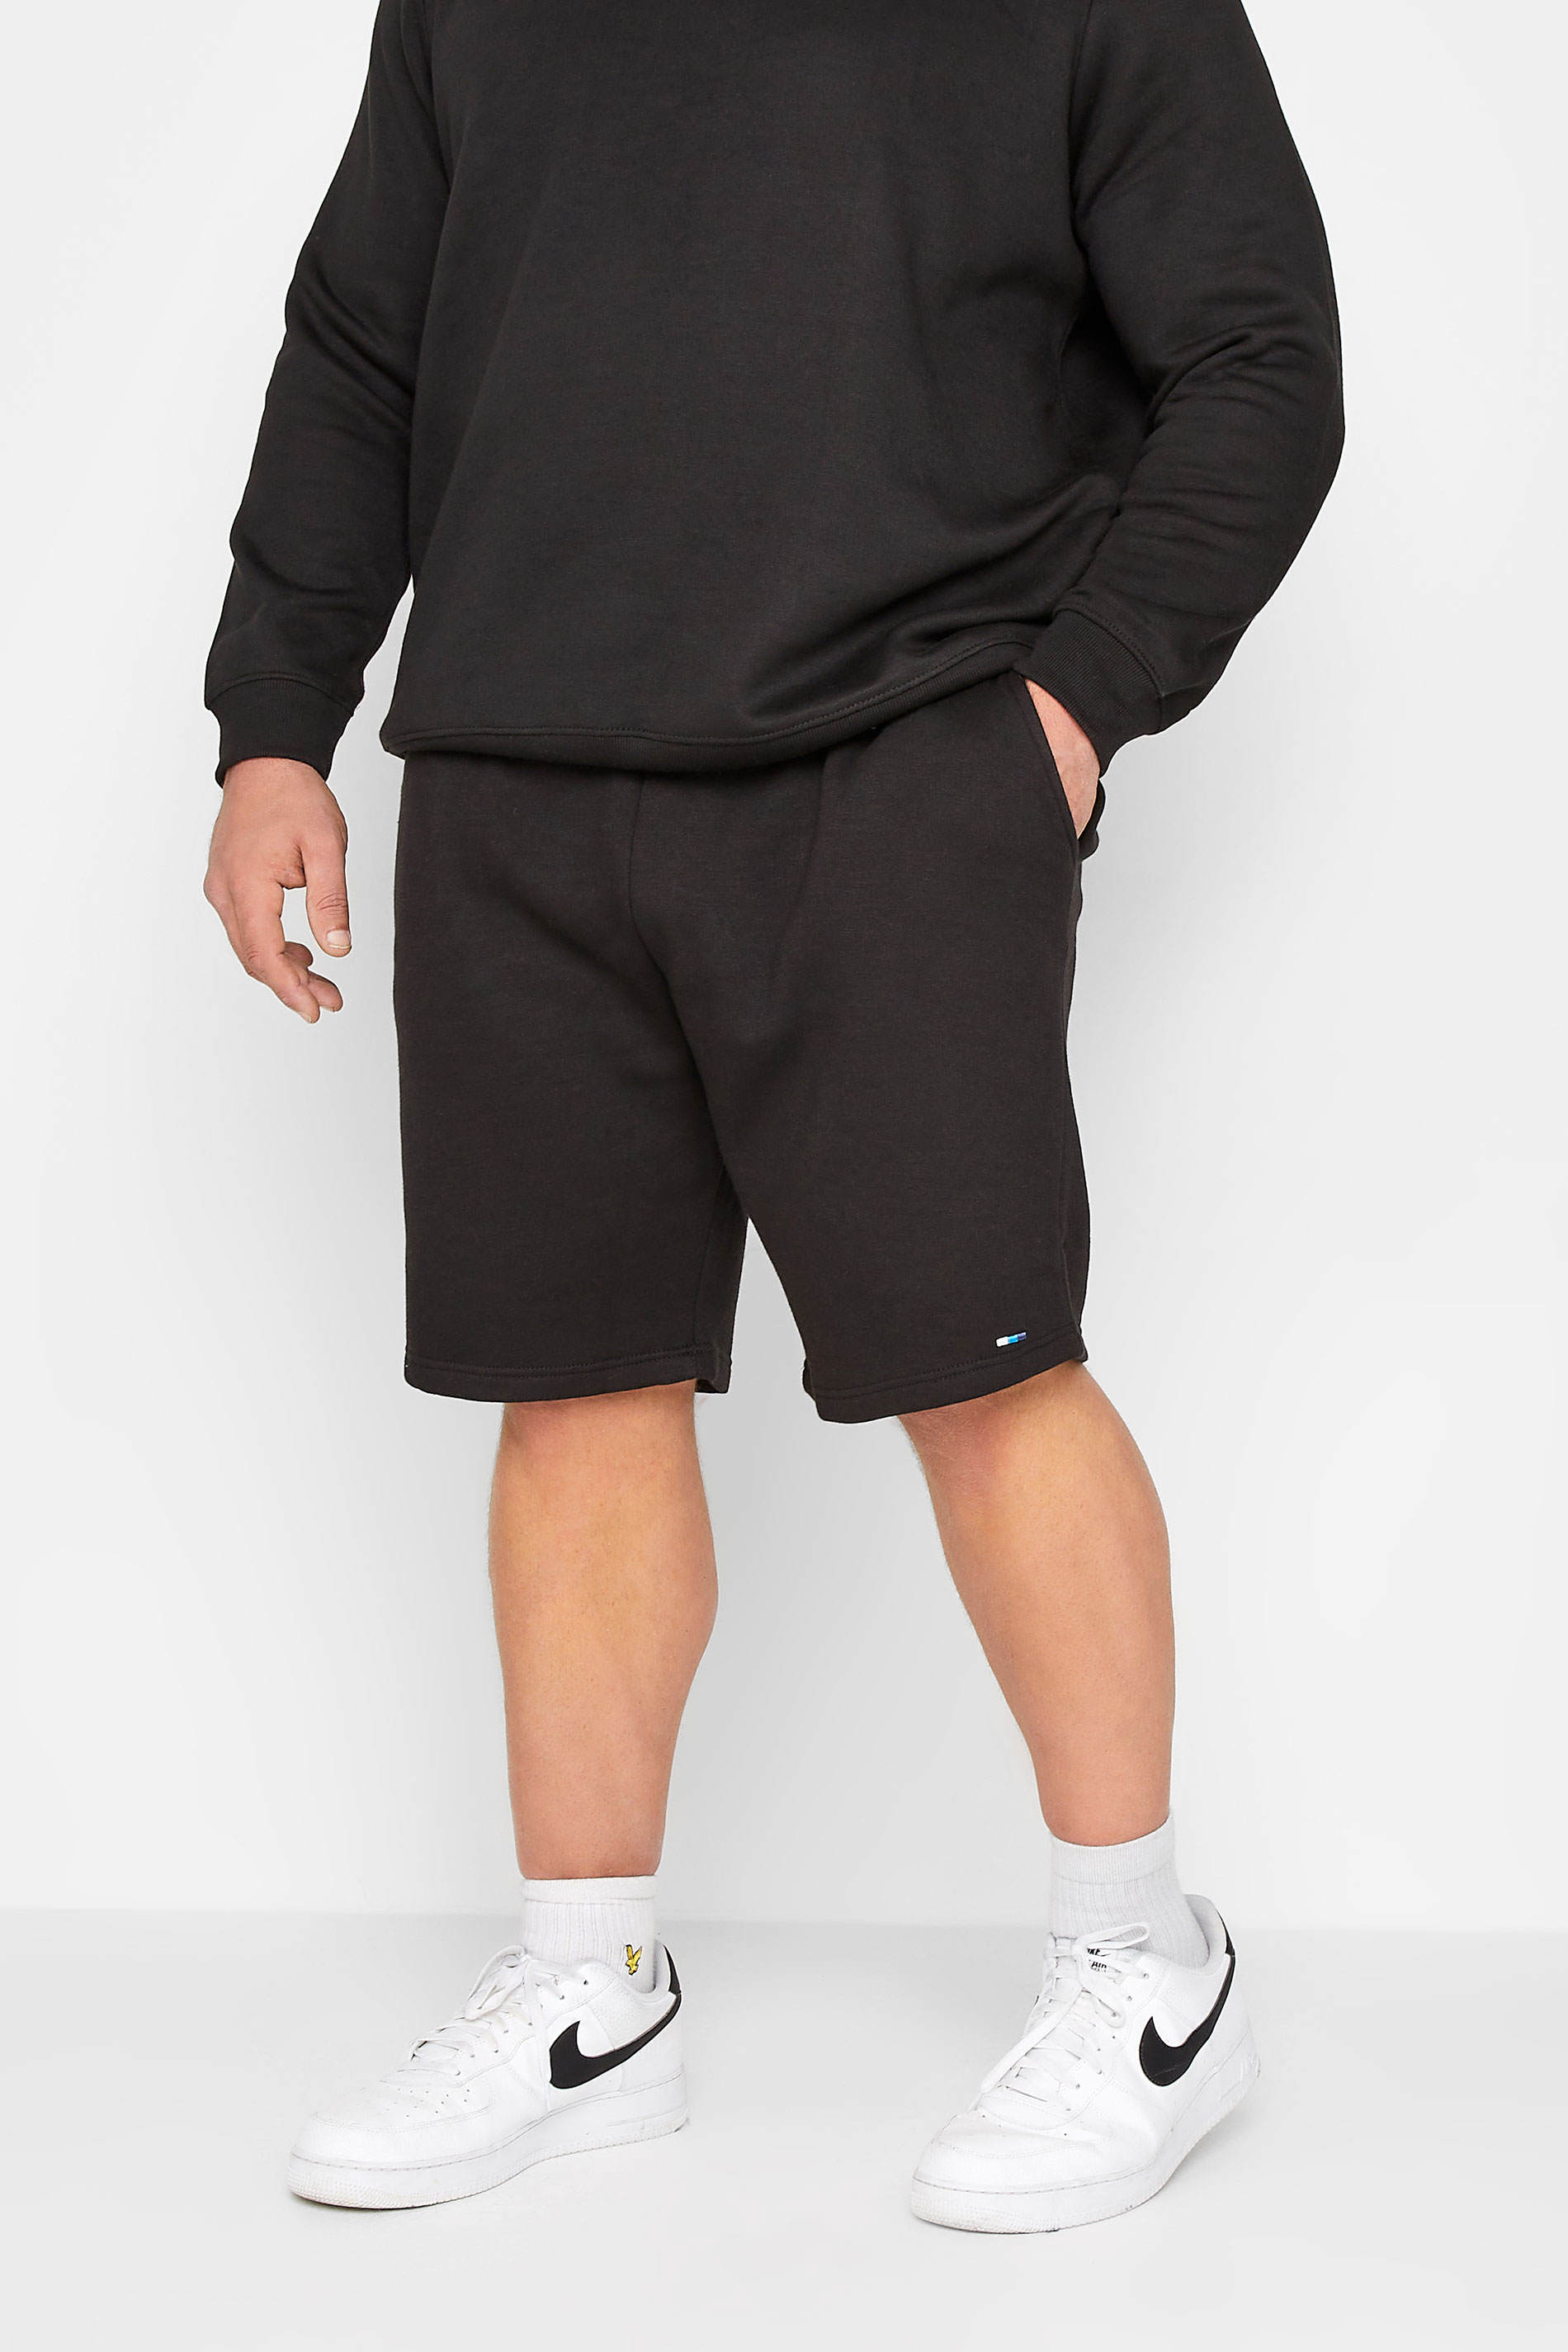 BadRhino Black Essential Jogger Shorts | BadRhino 1